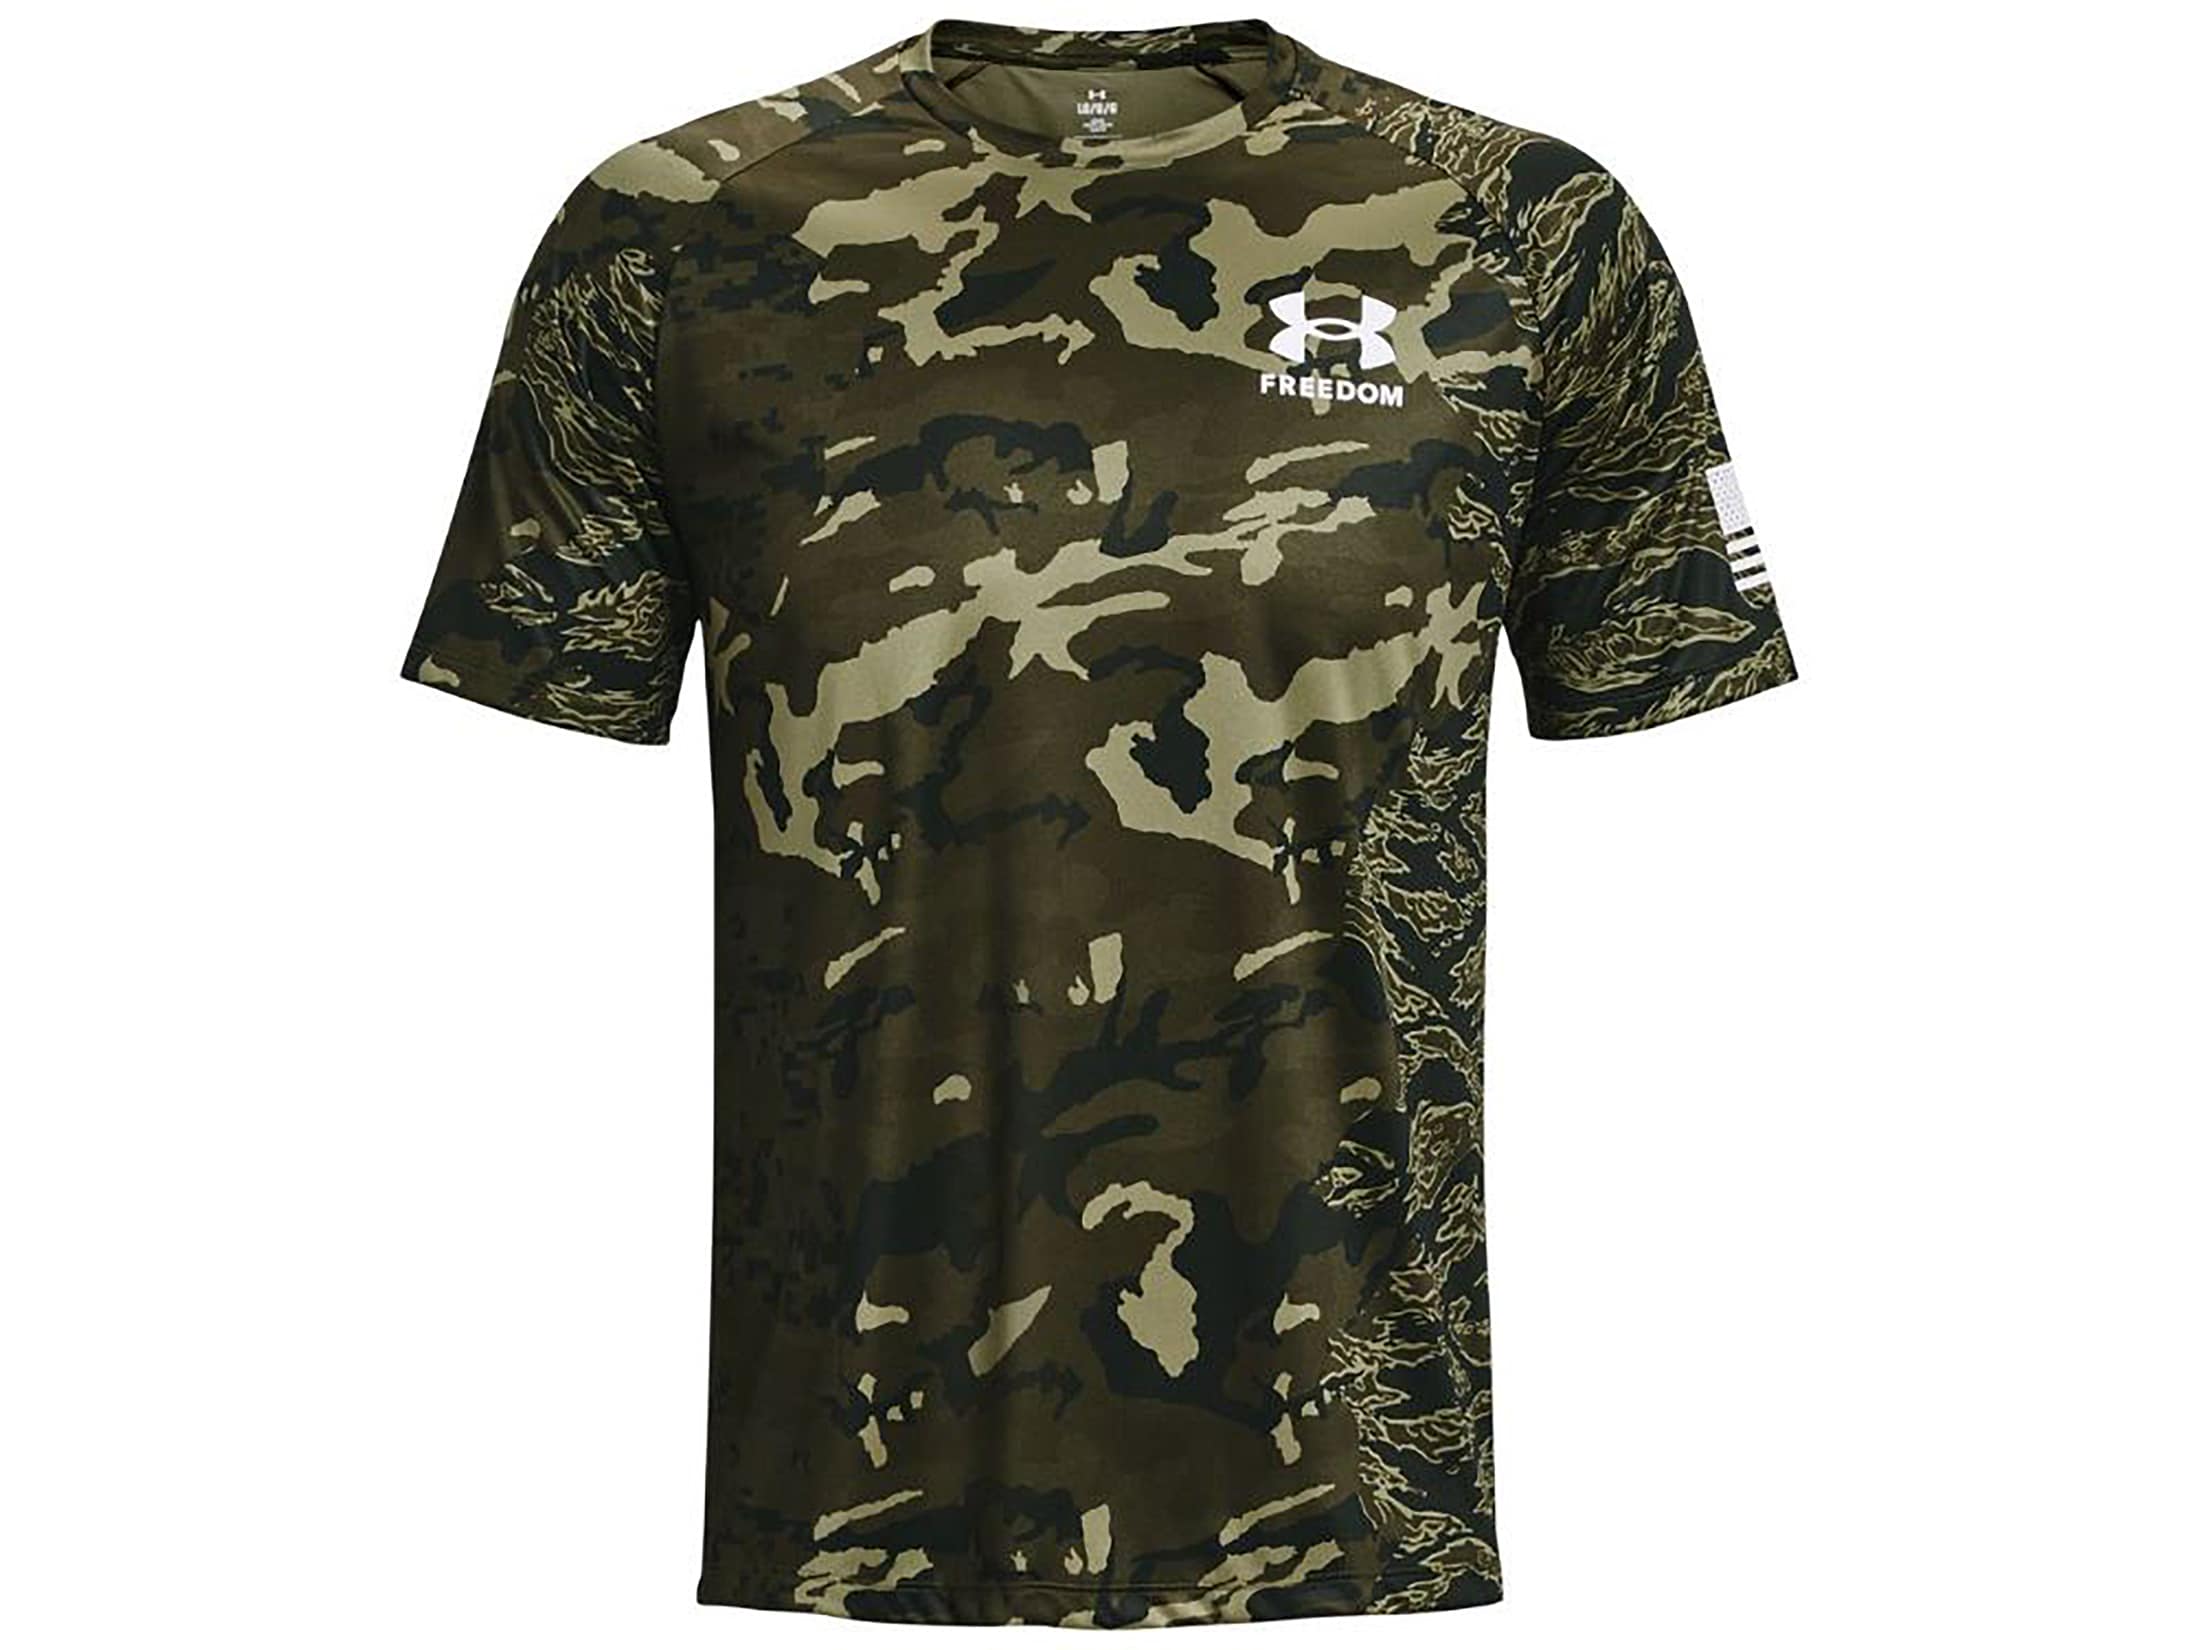 Under Armour Men's Freedom Tech Camo Short Sleeve T-Shirt Marine OD